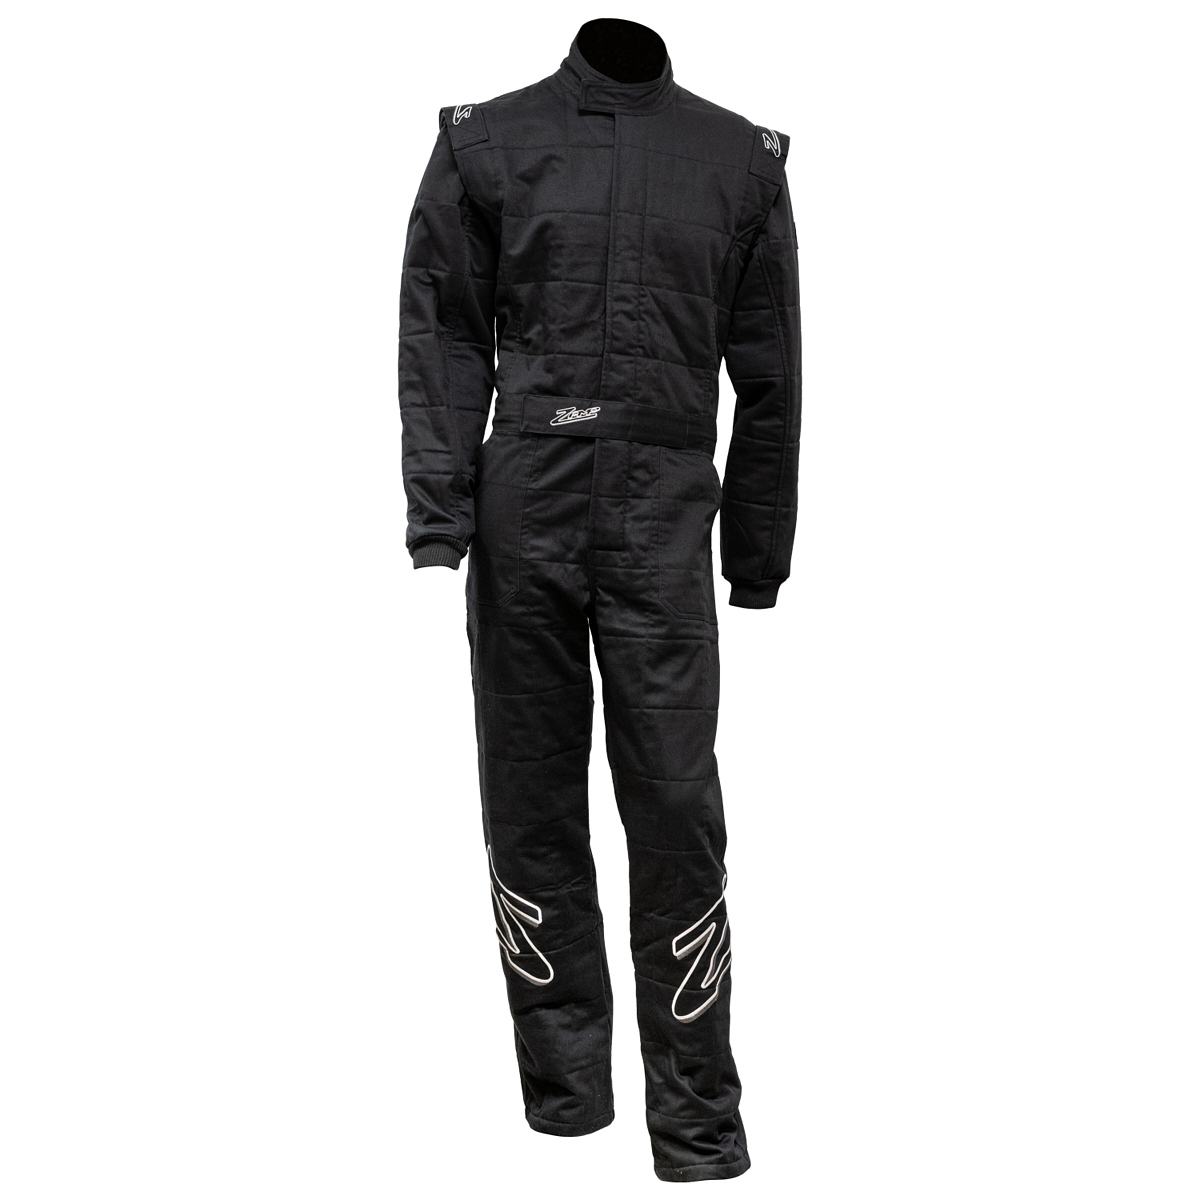 ZAMP Suit ZR-30 Large Black SFI3.2A/5